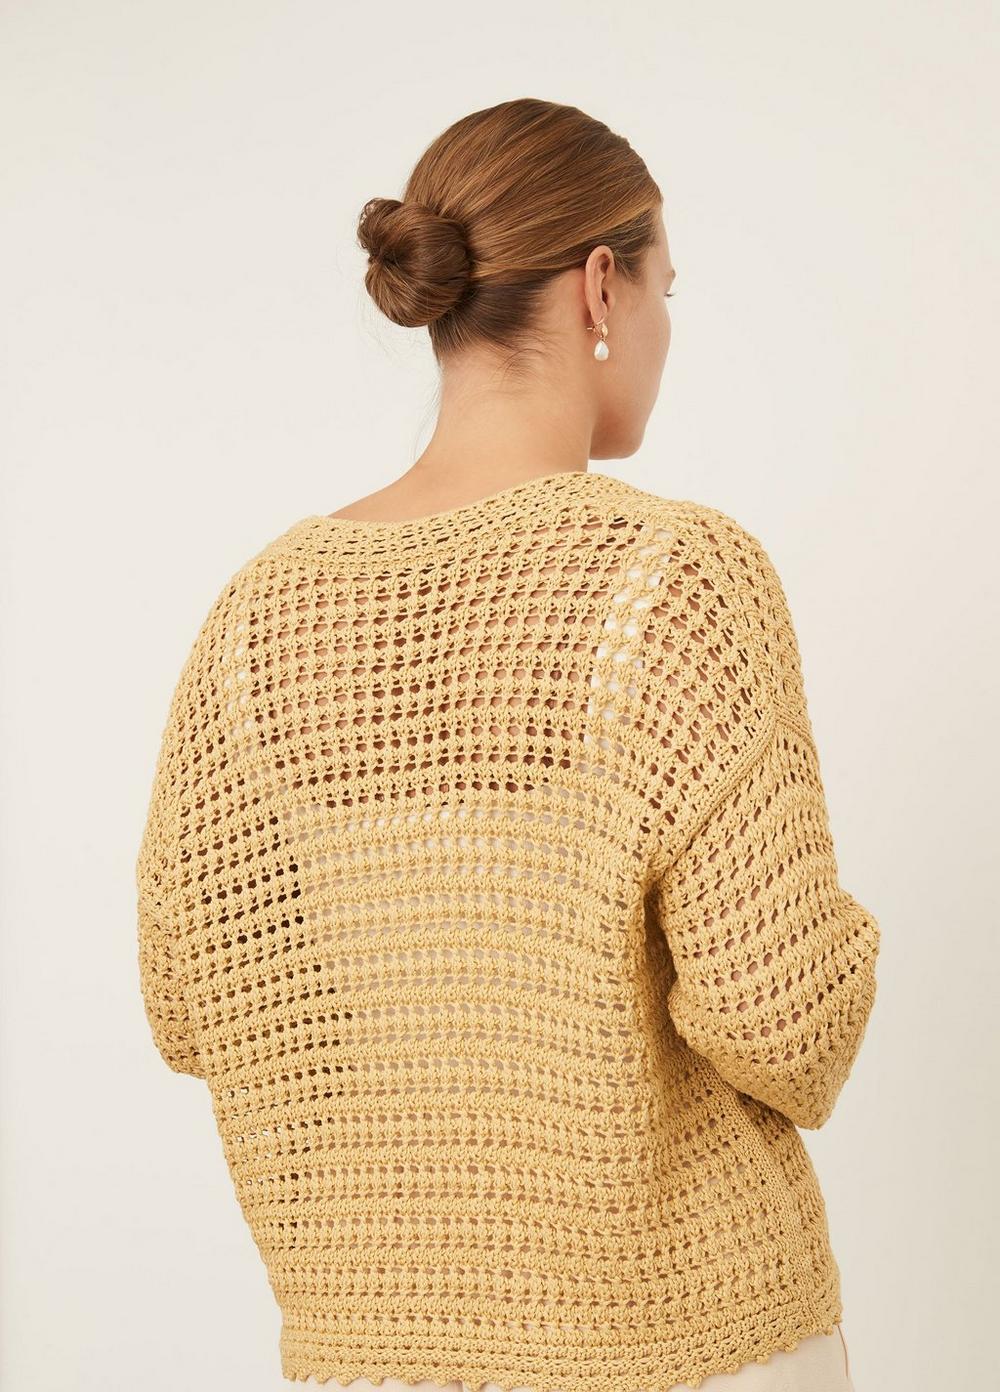 Crochet Cardigan Sweater